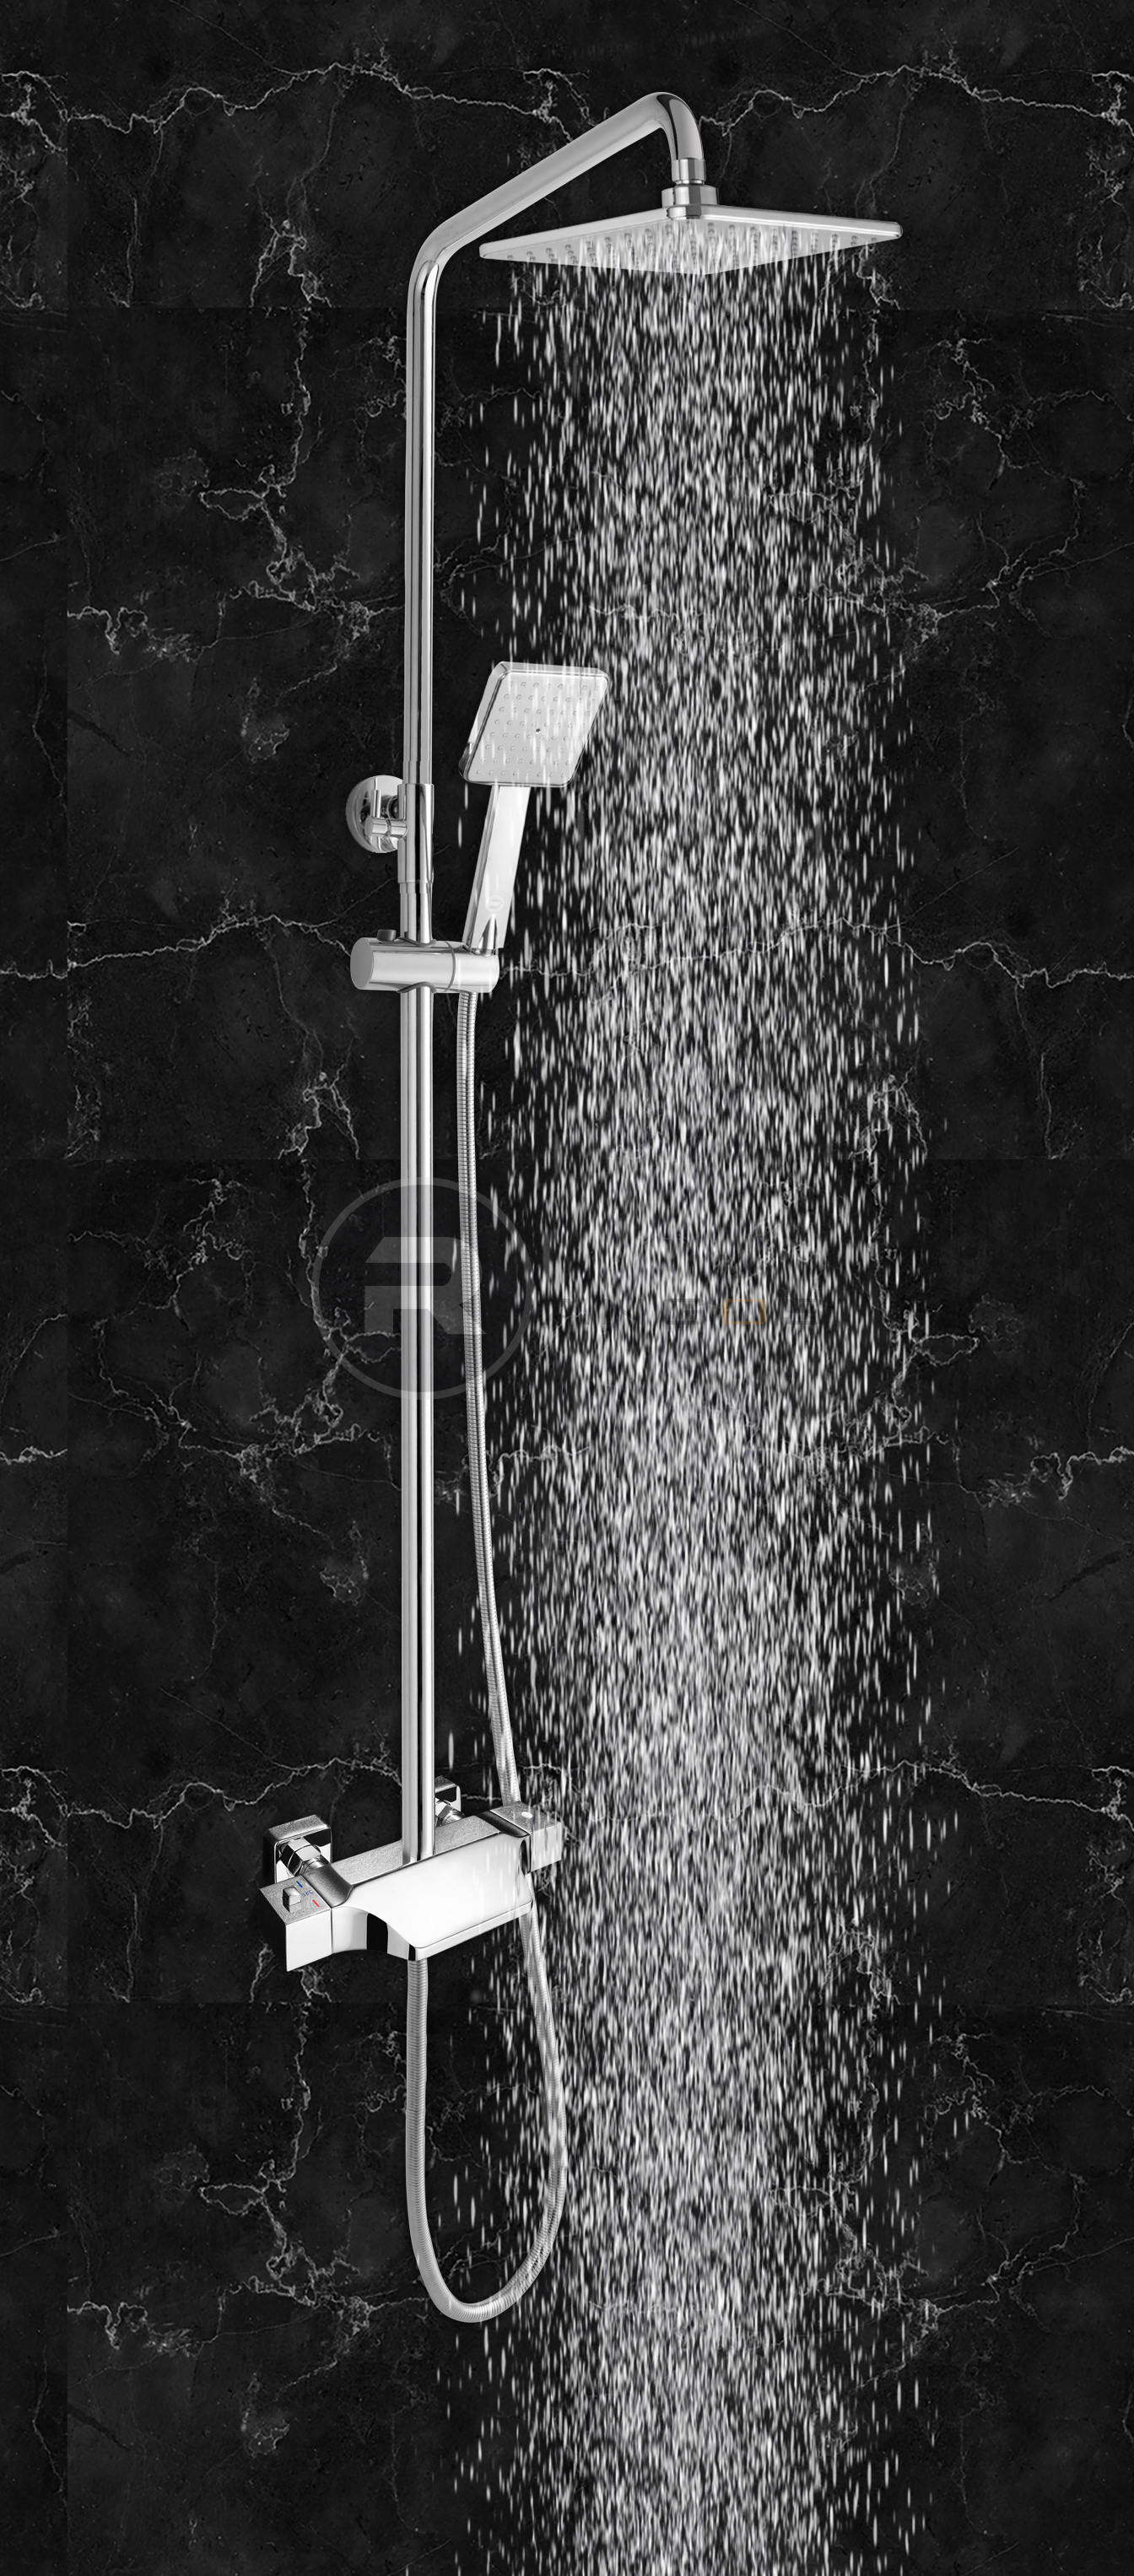 Bộ sen cây tắm cao cấp Rangos RG-305